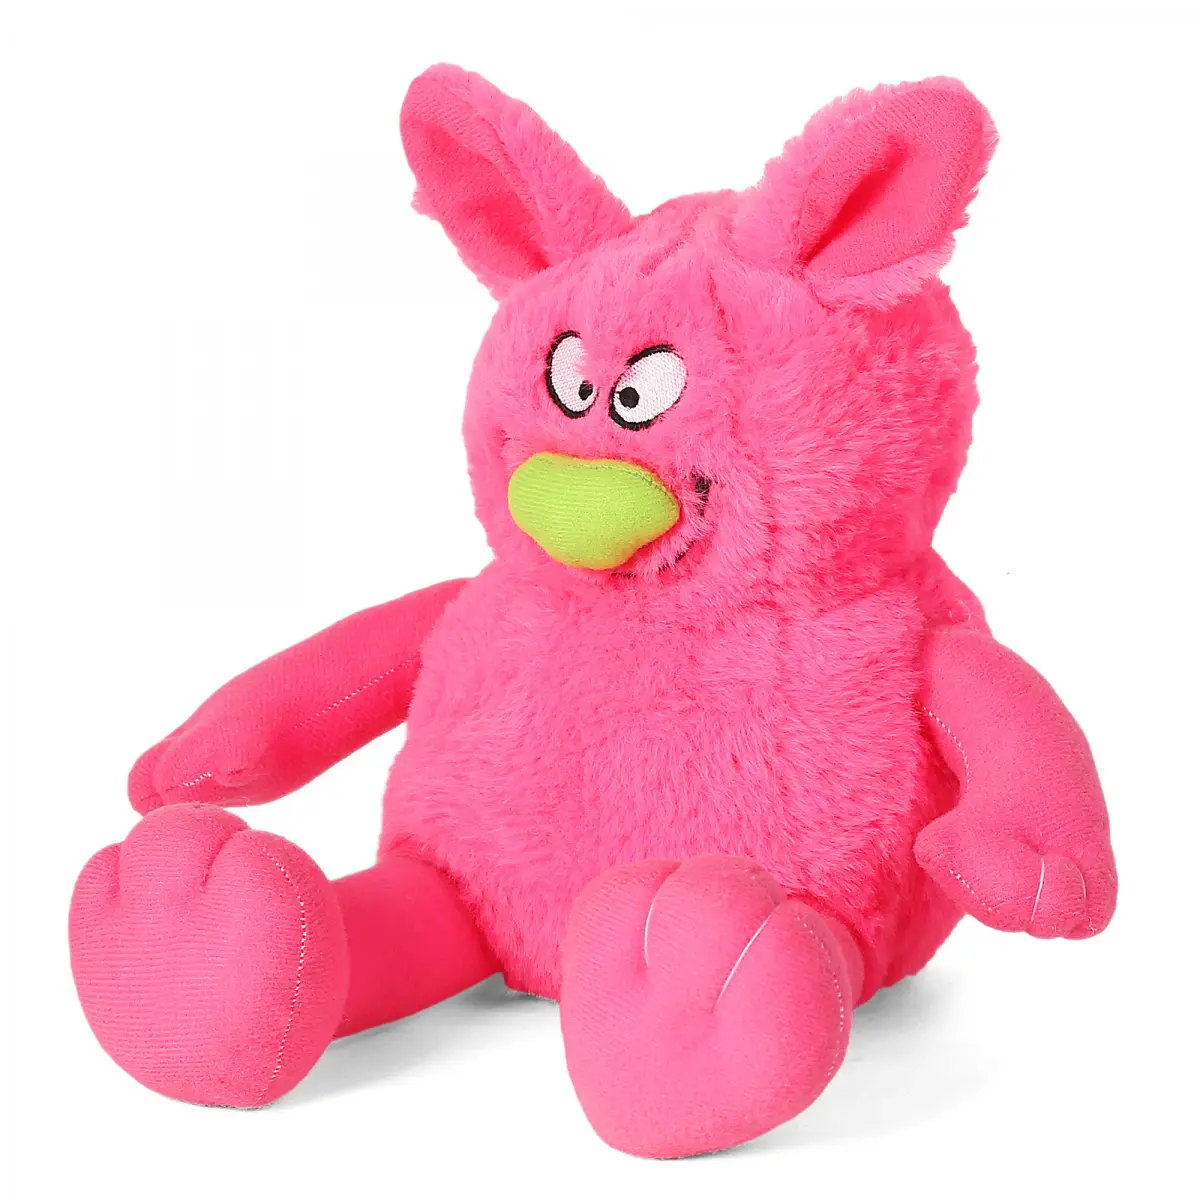 Hamleys Pap Ziggles Soft Toys for Kids, 3Y+, Pink